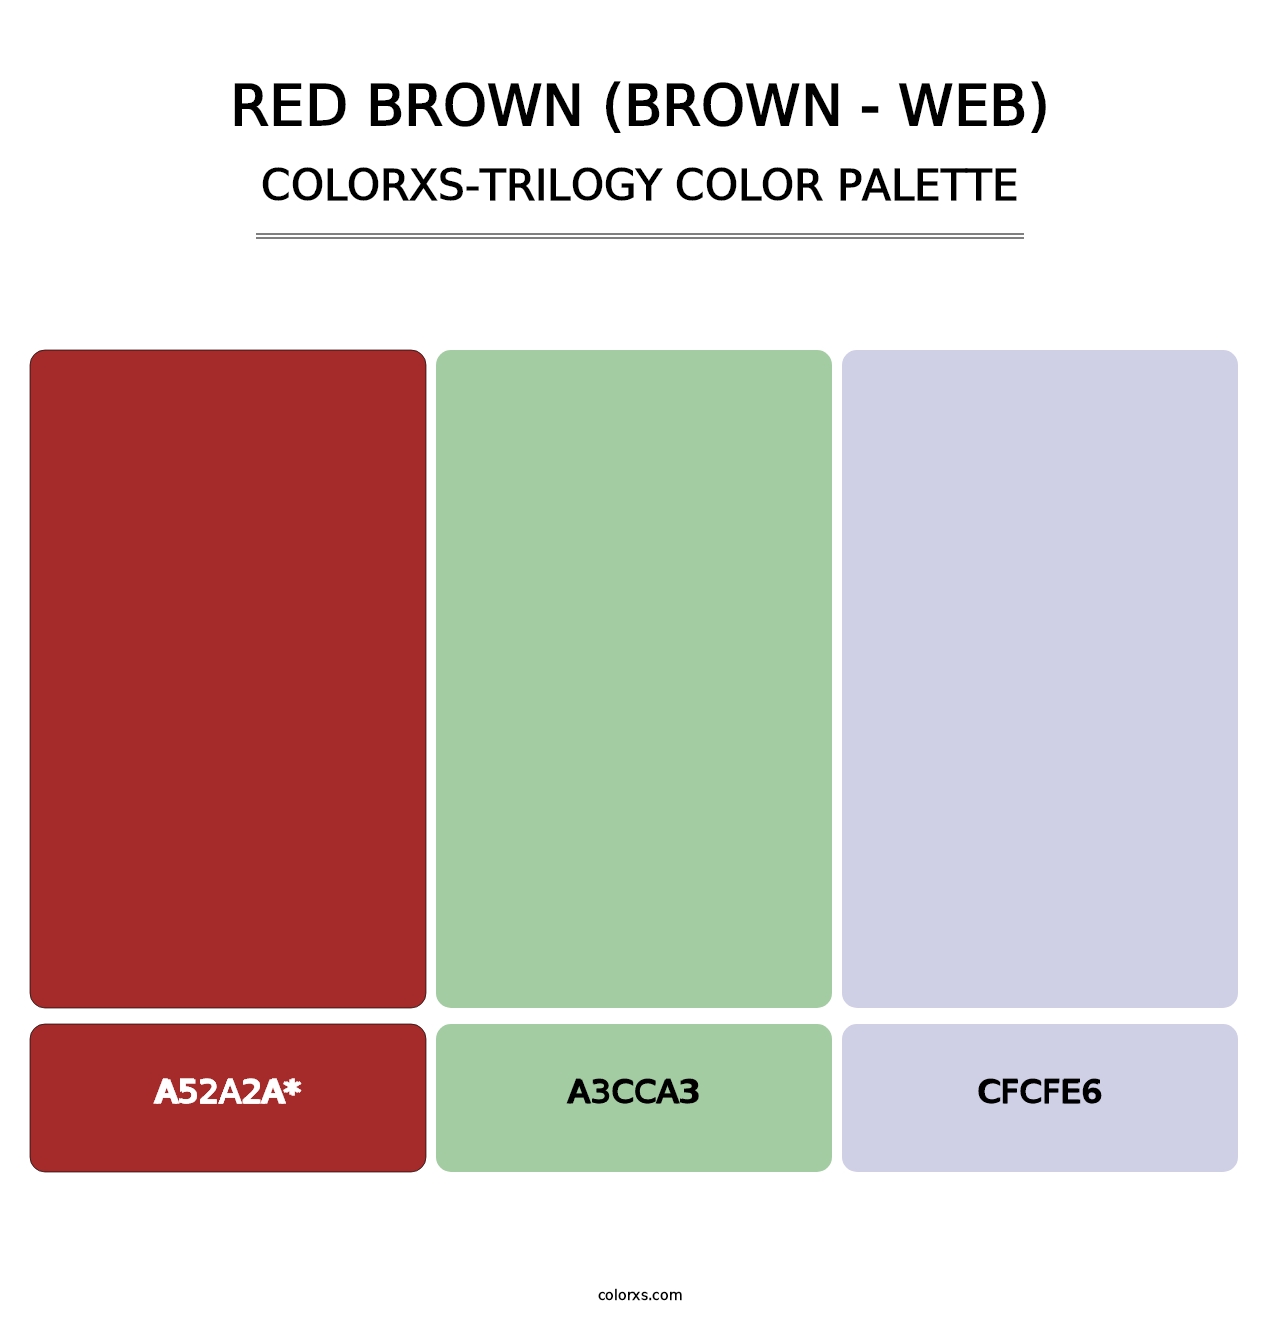 Red Brown (Brown - Web) - Colorxs Trilogy Palette